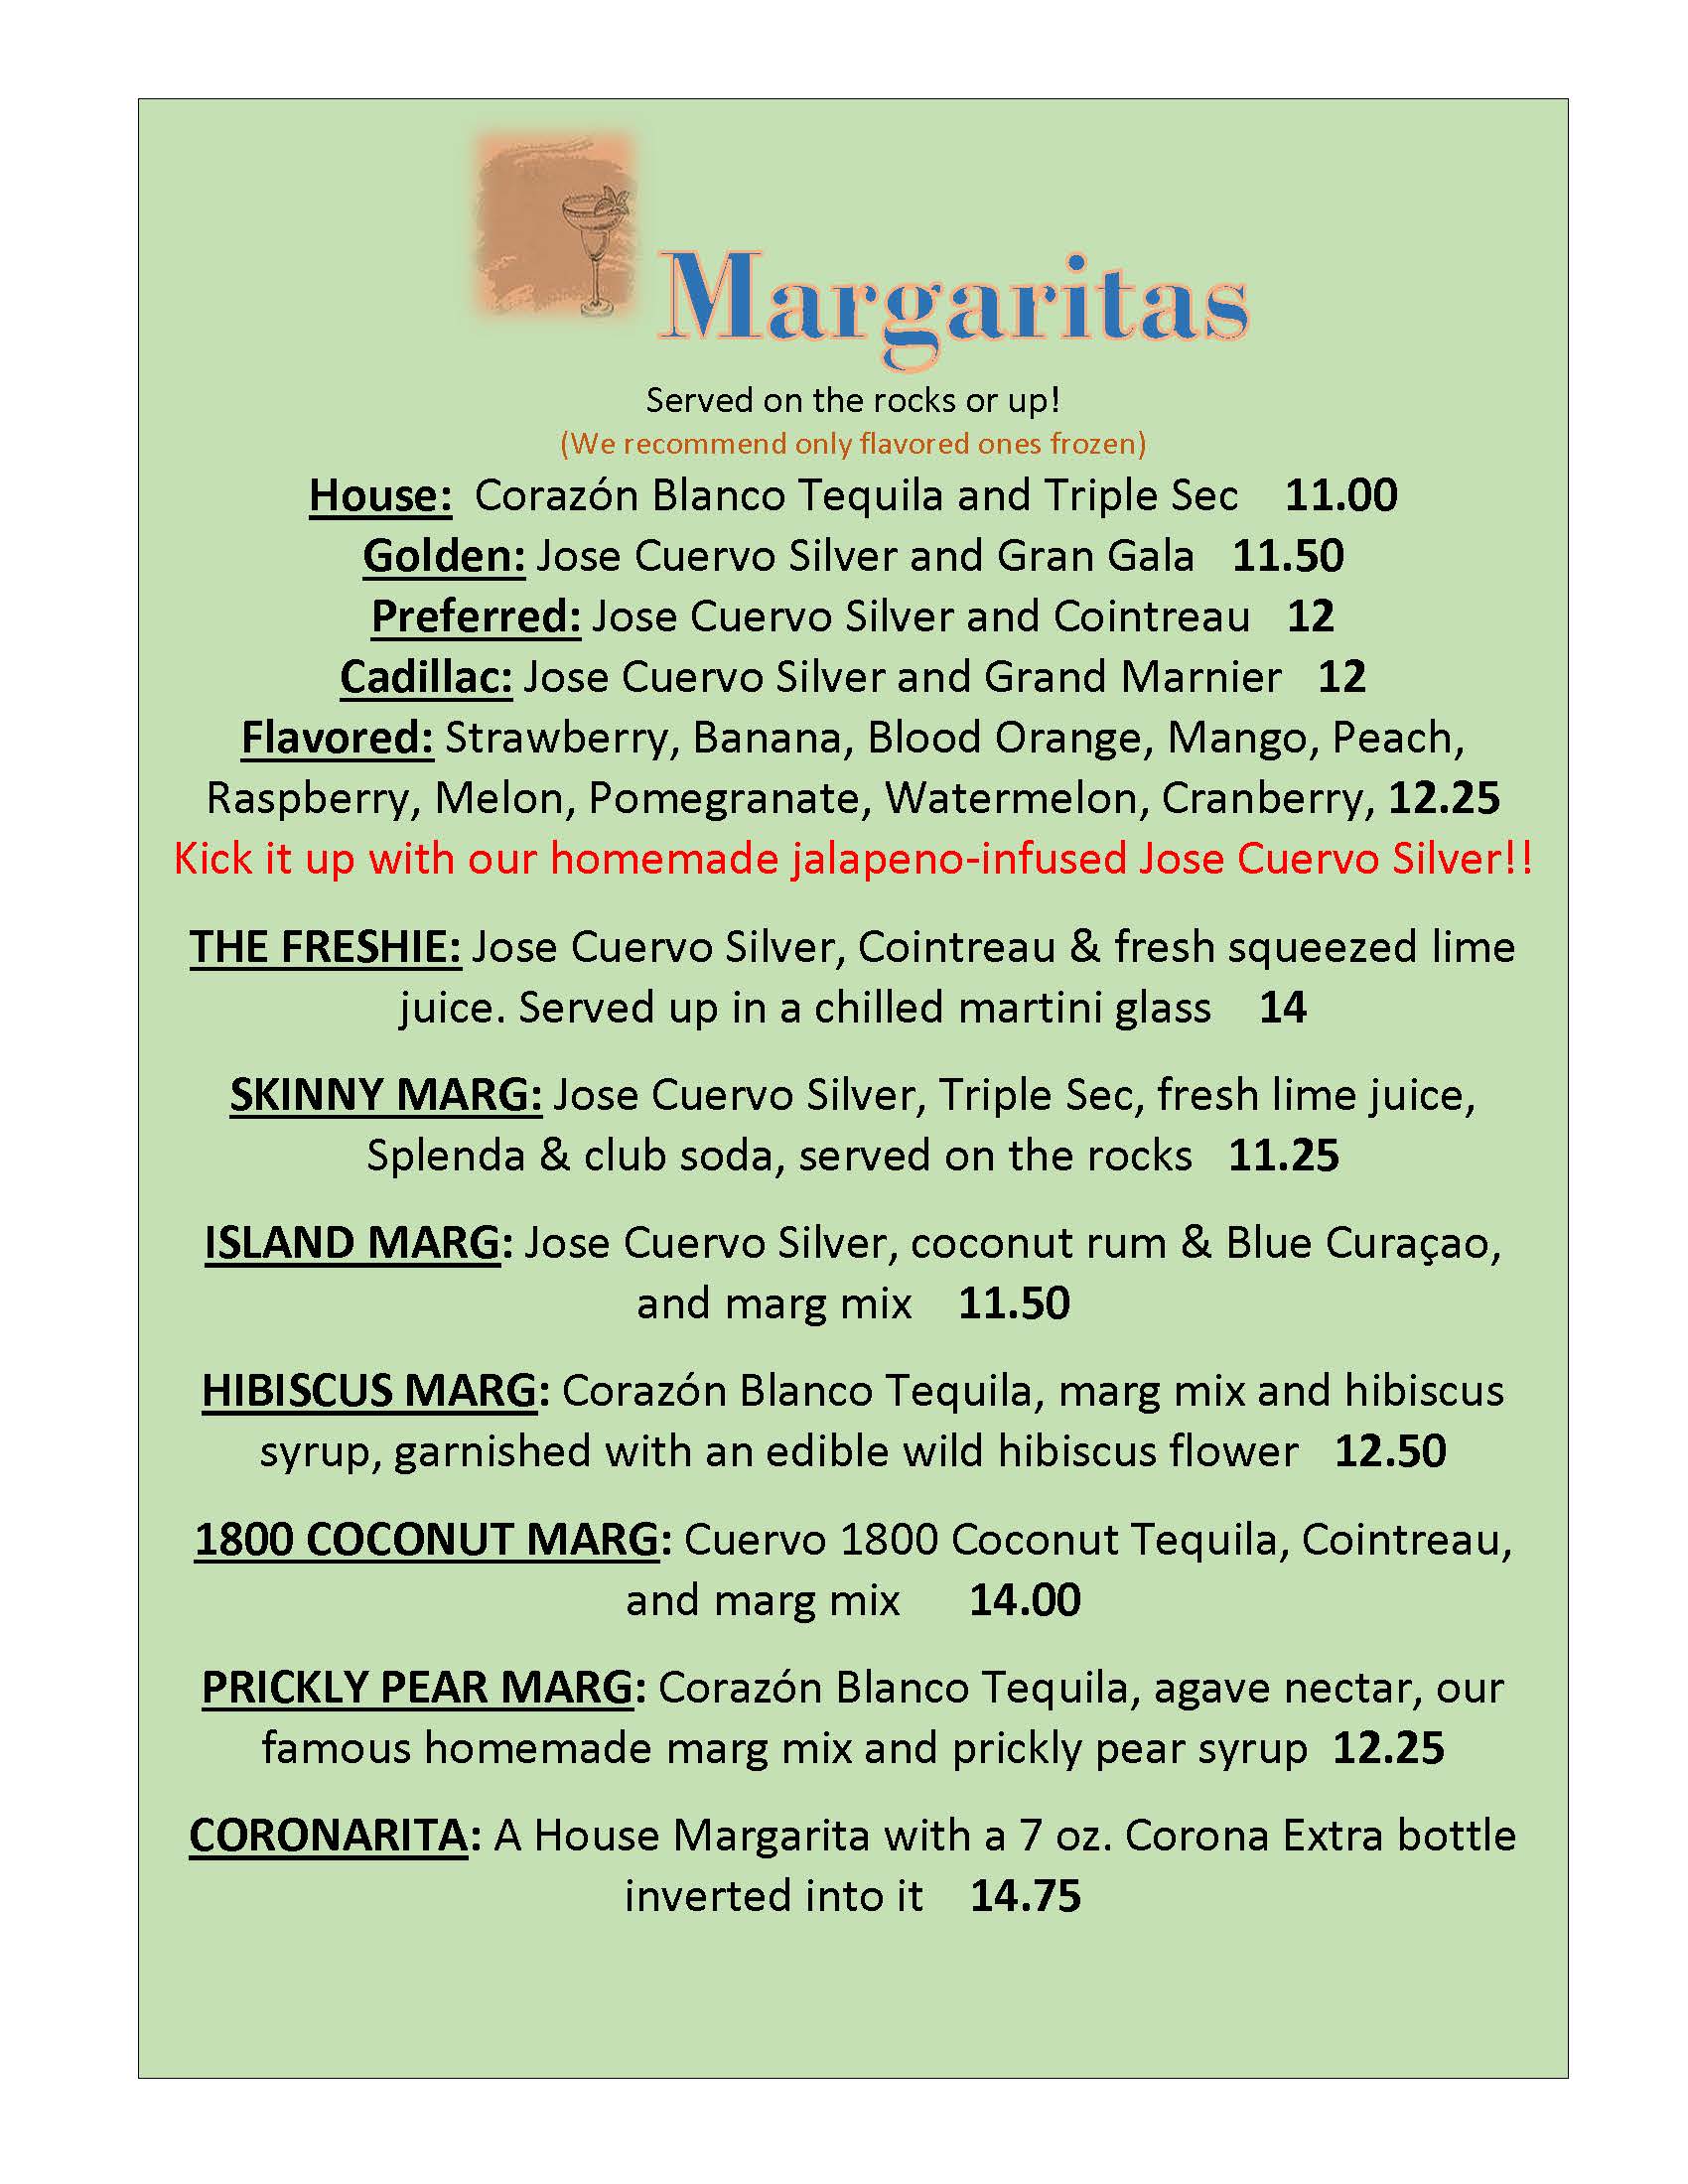 Margaritas menu with prices.